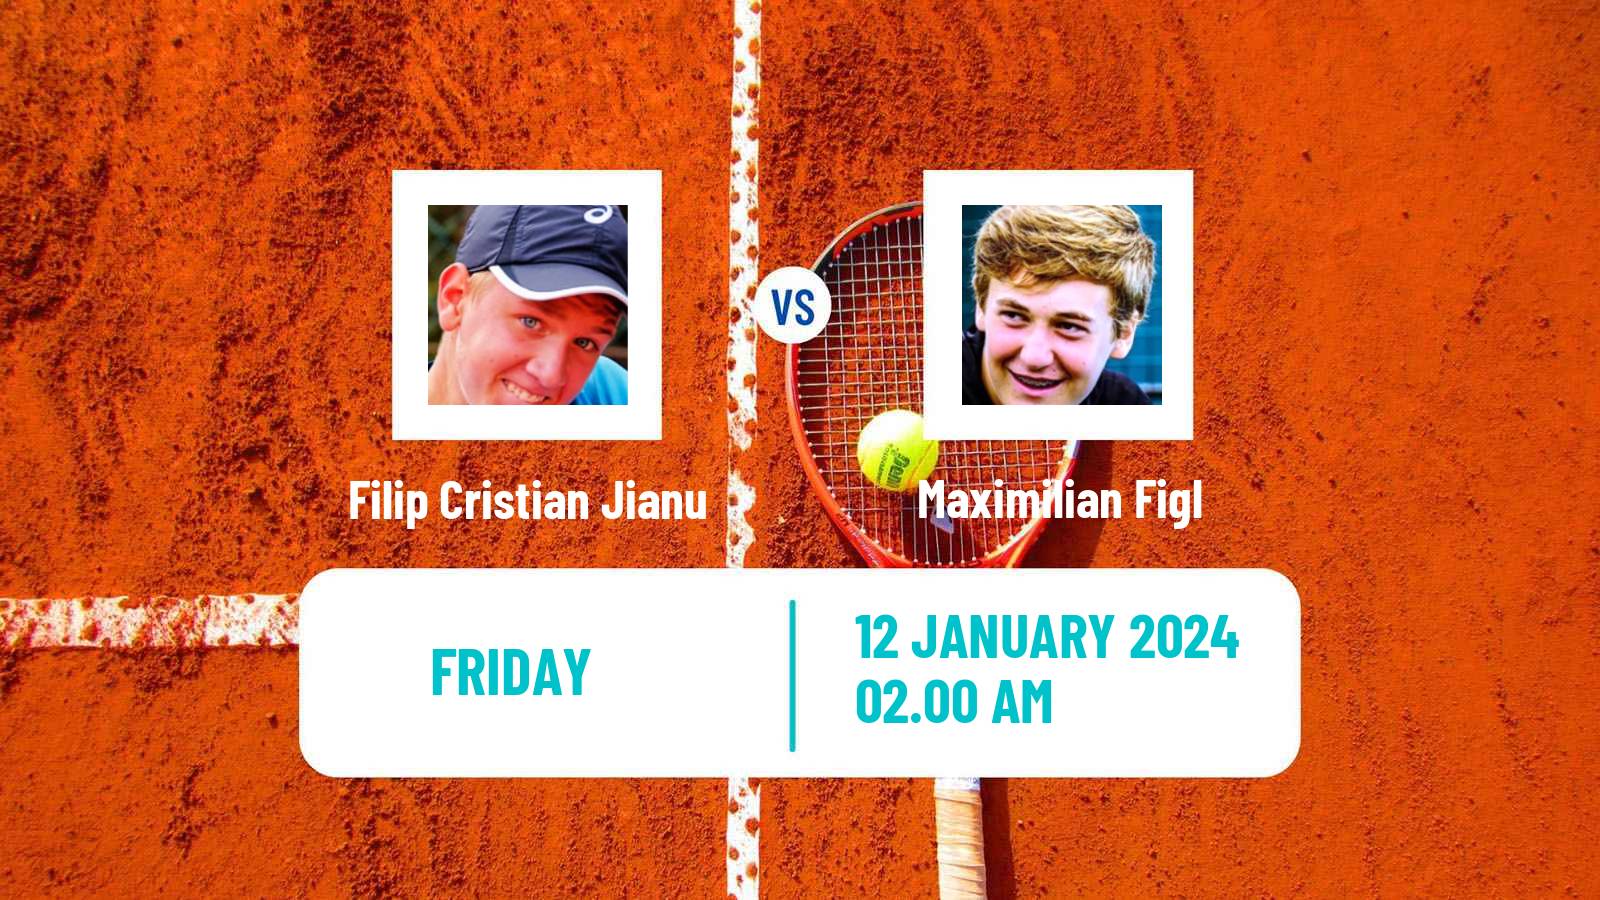 Tennis ITF M15 Antalya Men Filip Cristian Jianu - Maximilian Figl